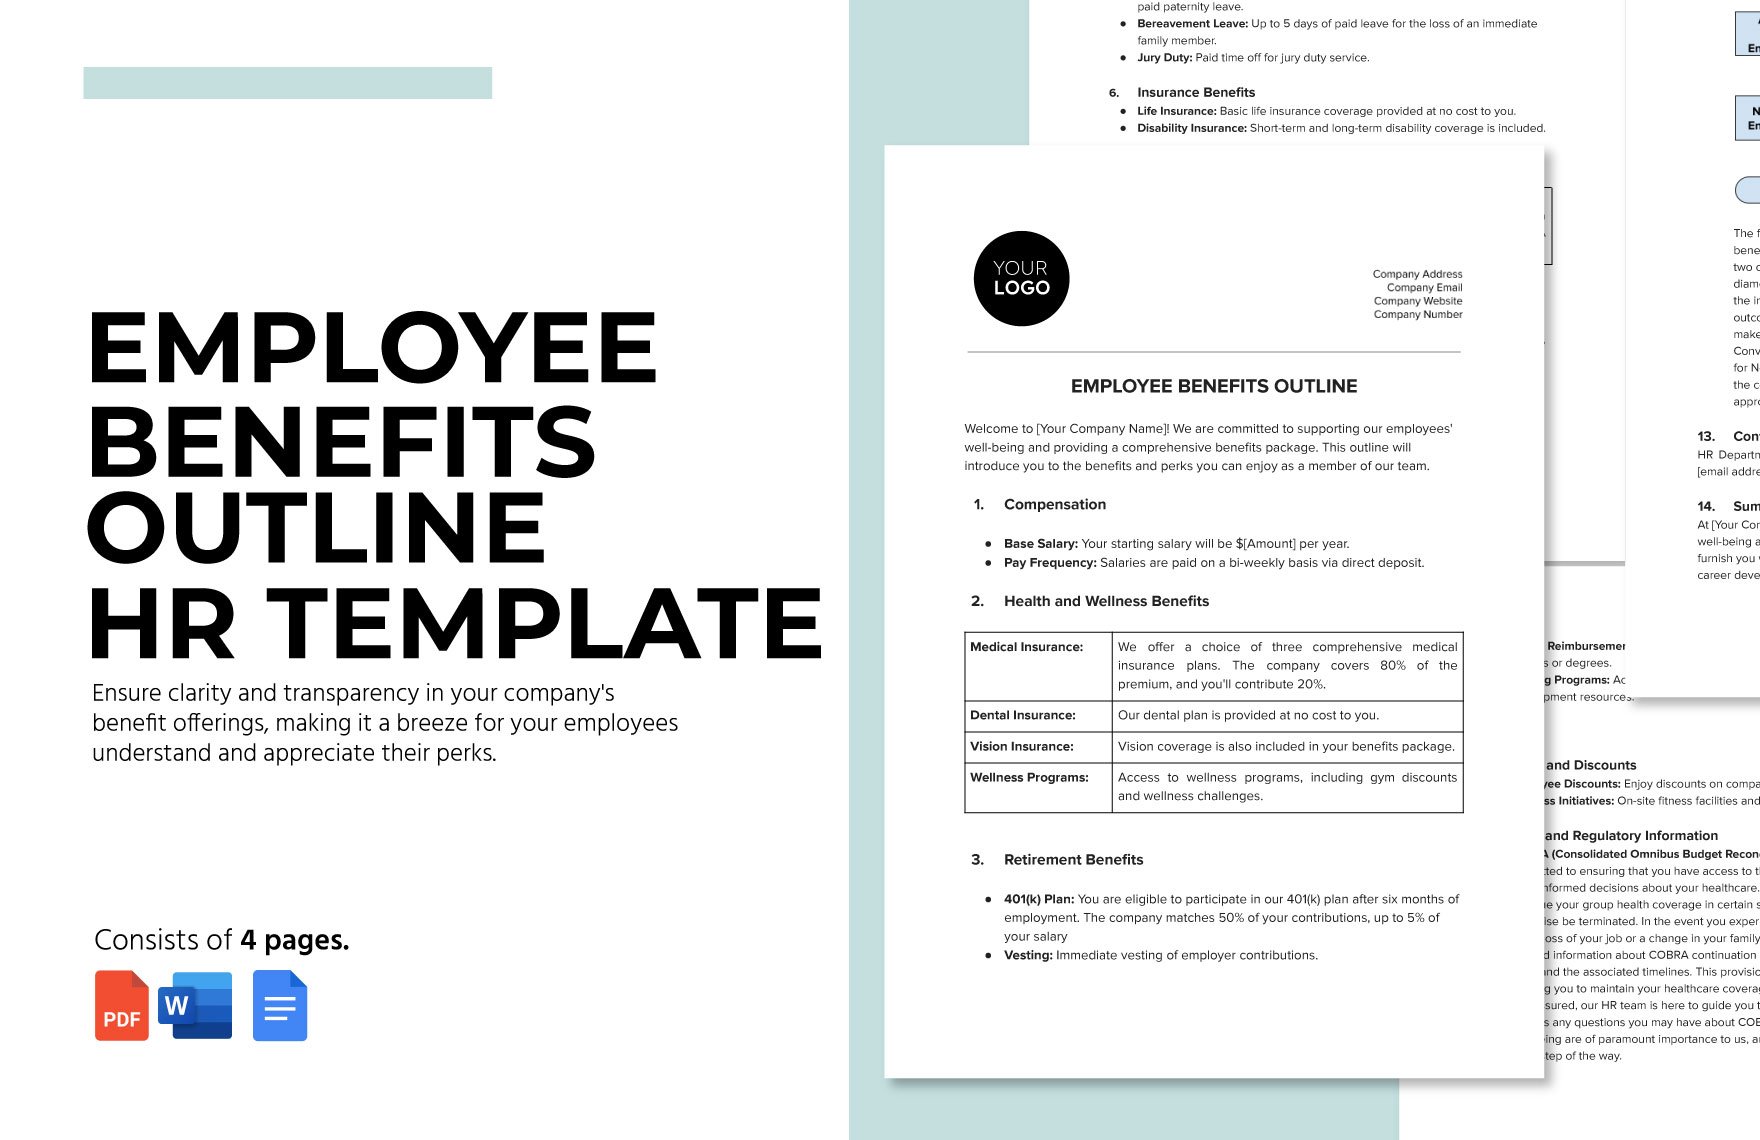 Employee Benefits Outline HR Template in Google Docs